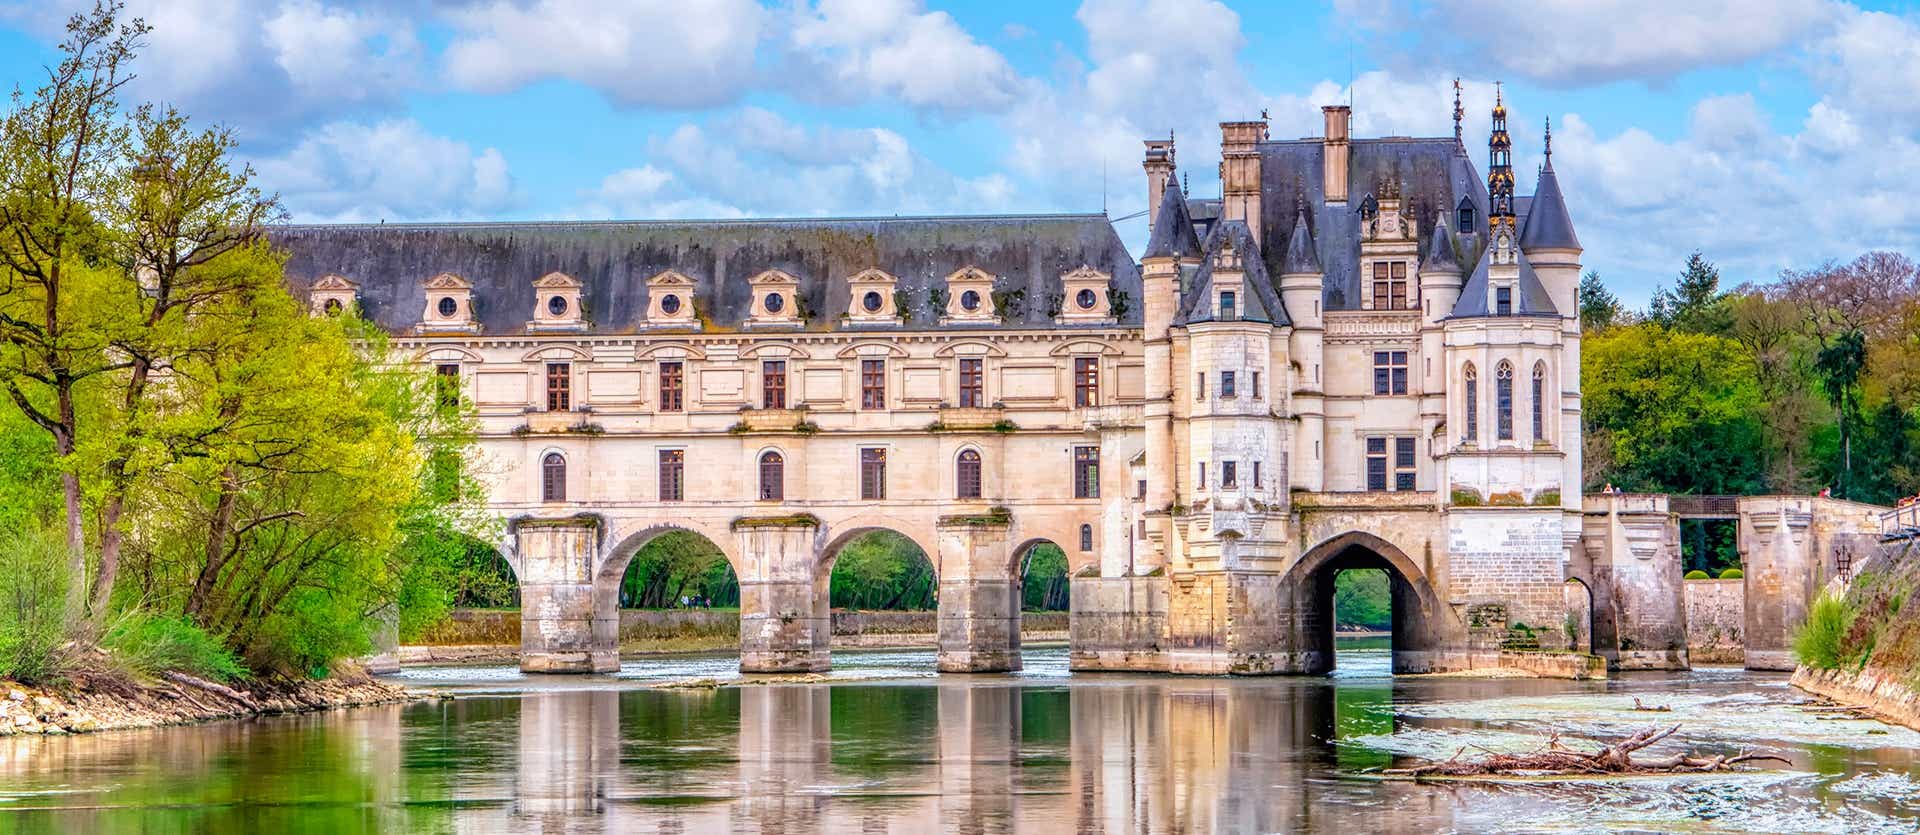 Castle of Chenonceau <span class="iconos separador"></span> Loire Valley